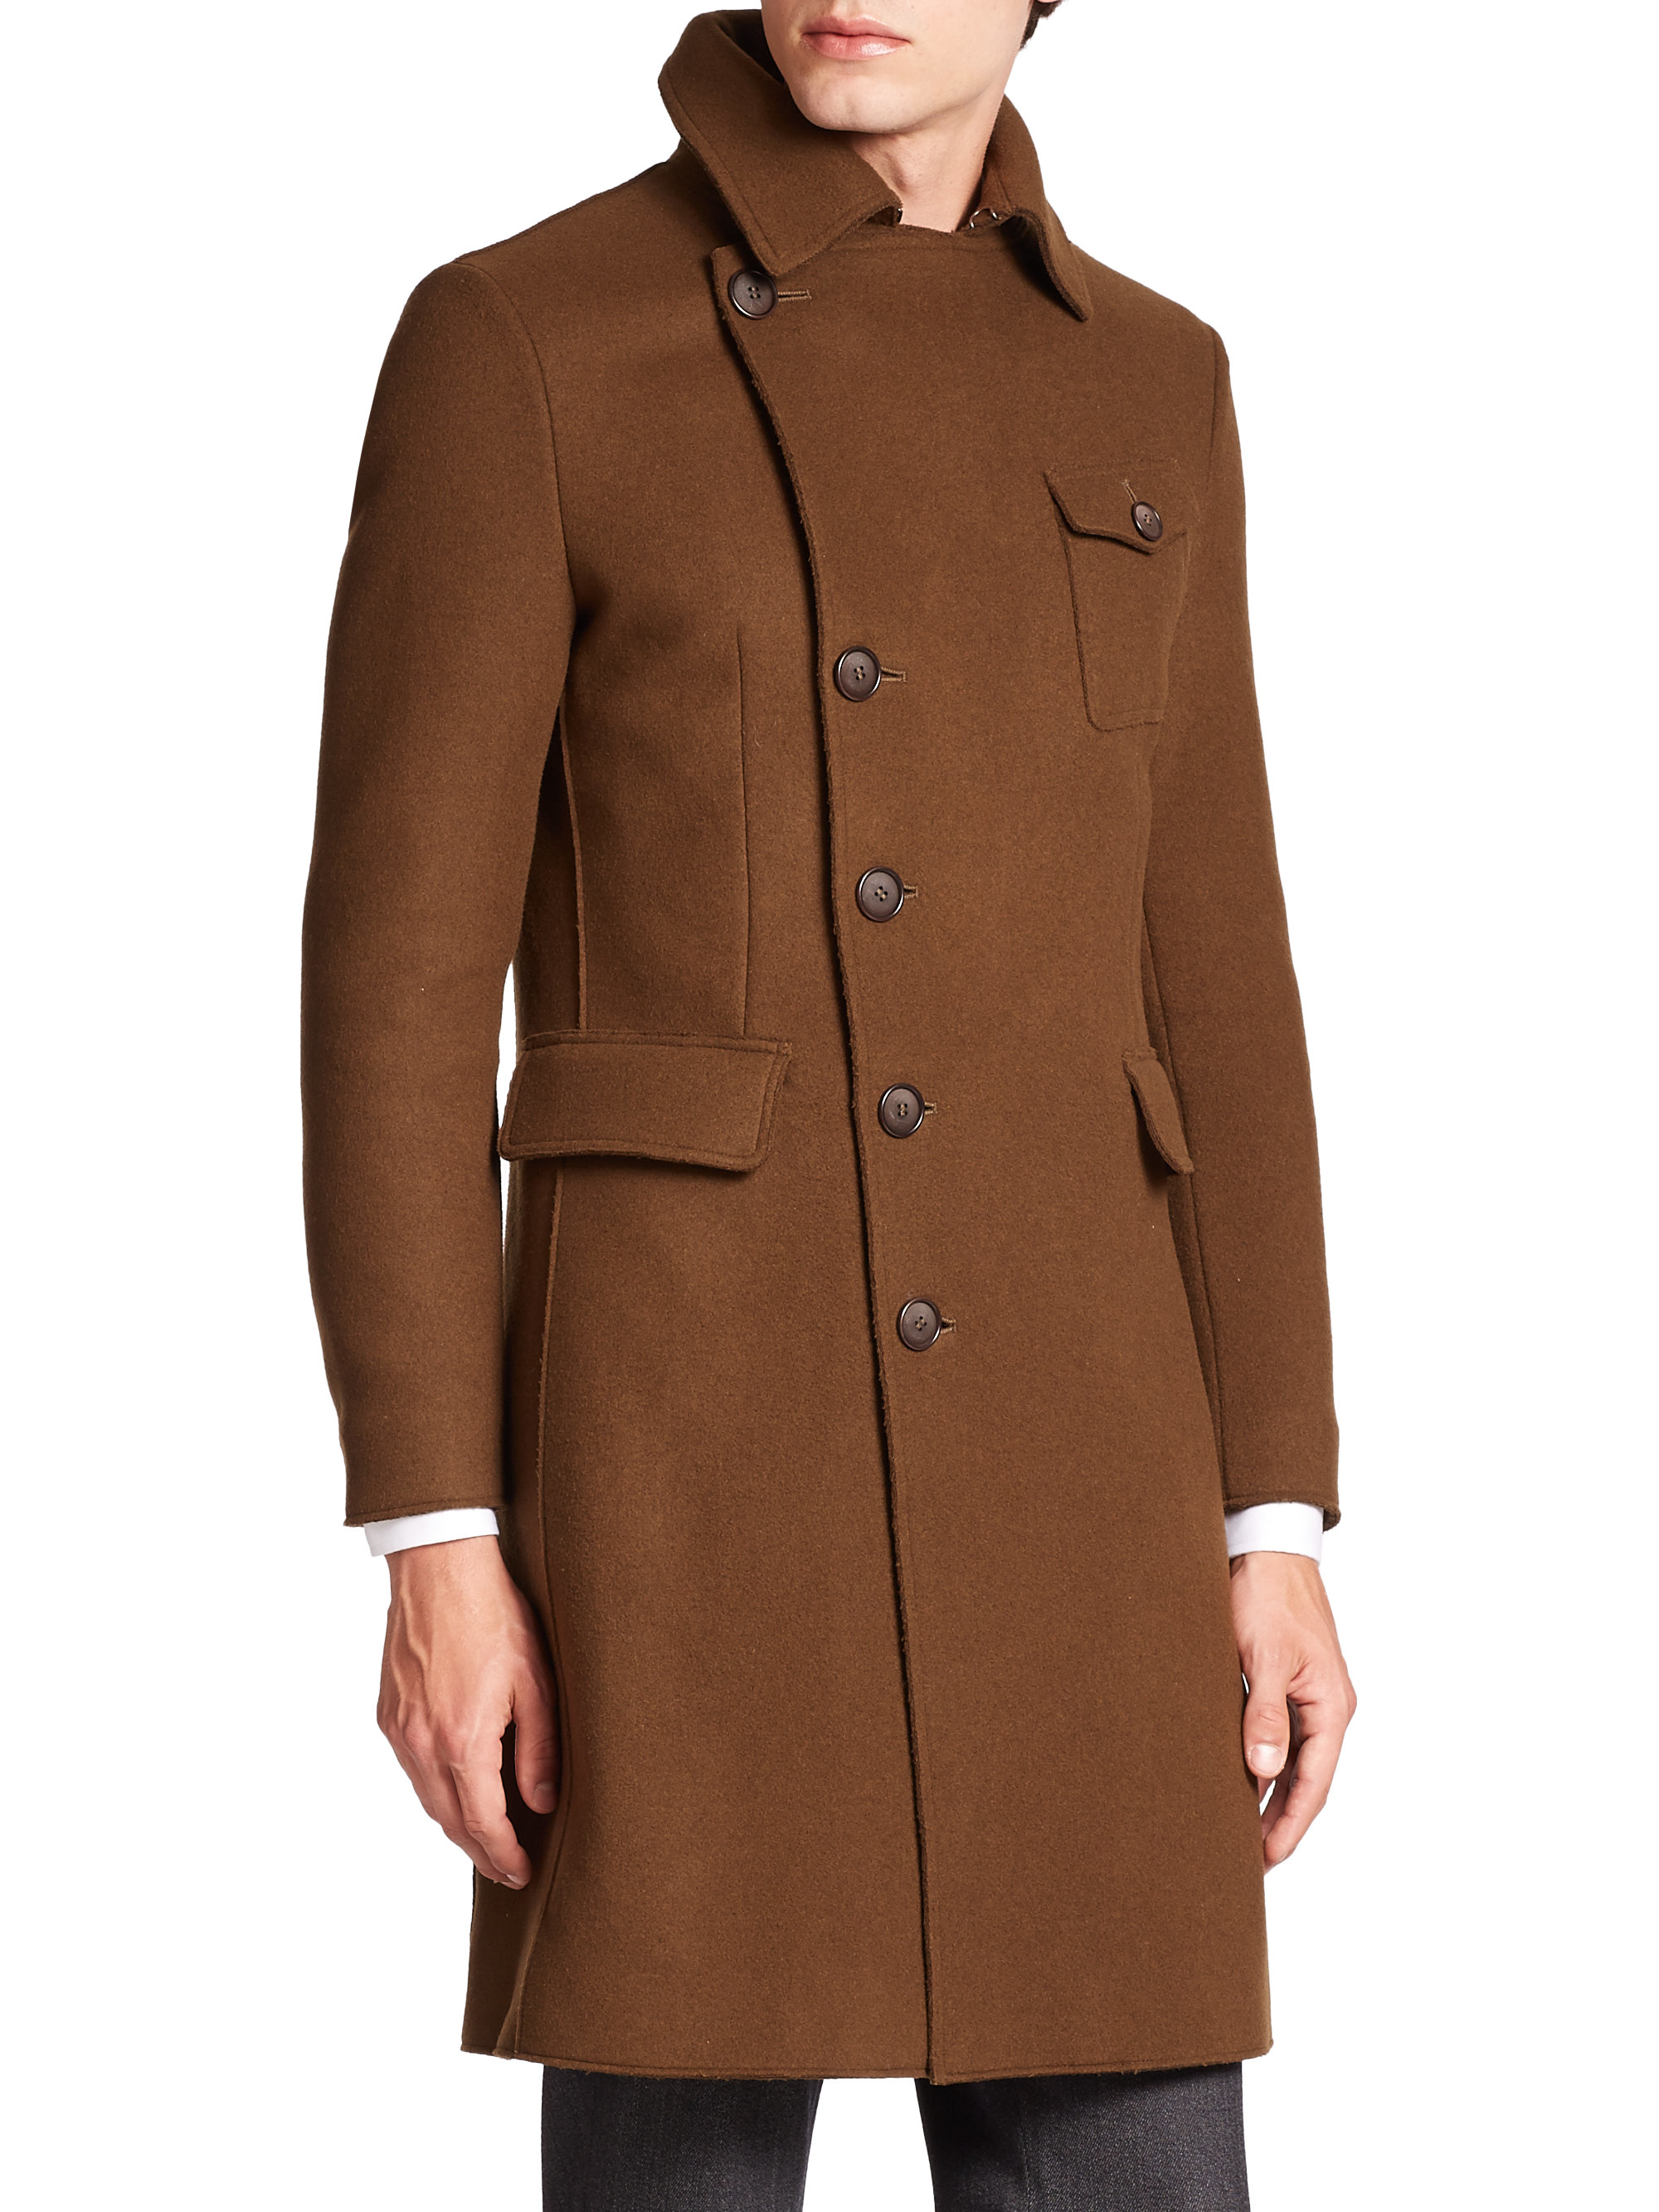 Giorgio armani Virgin Wool Military Coat in Brown for Men | Lyst